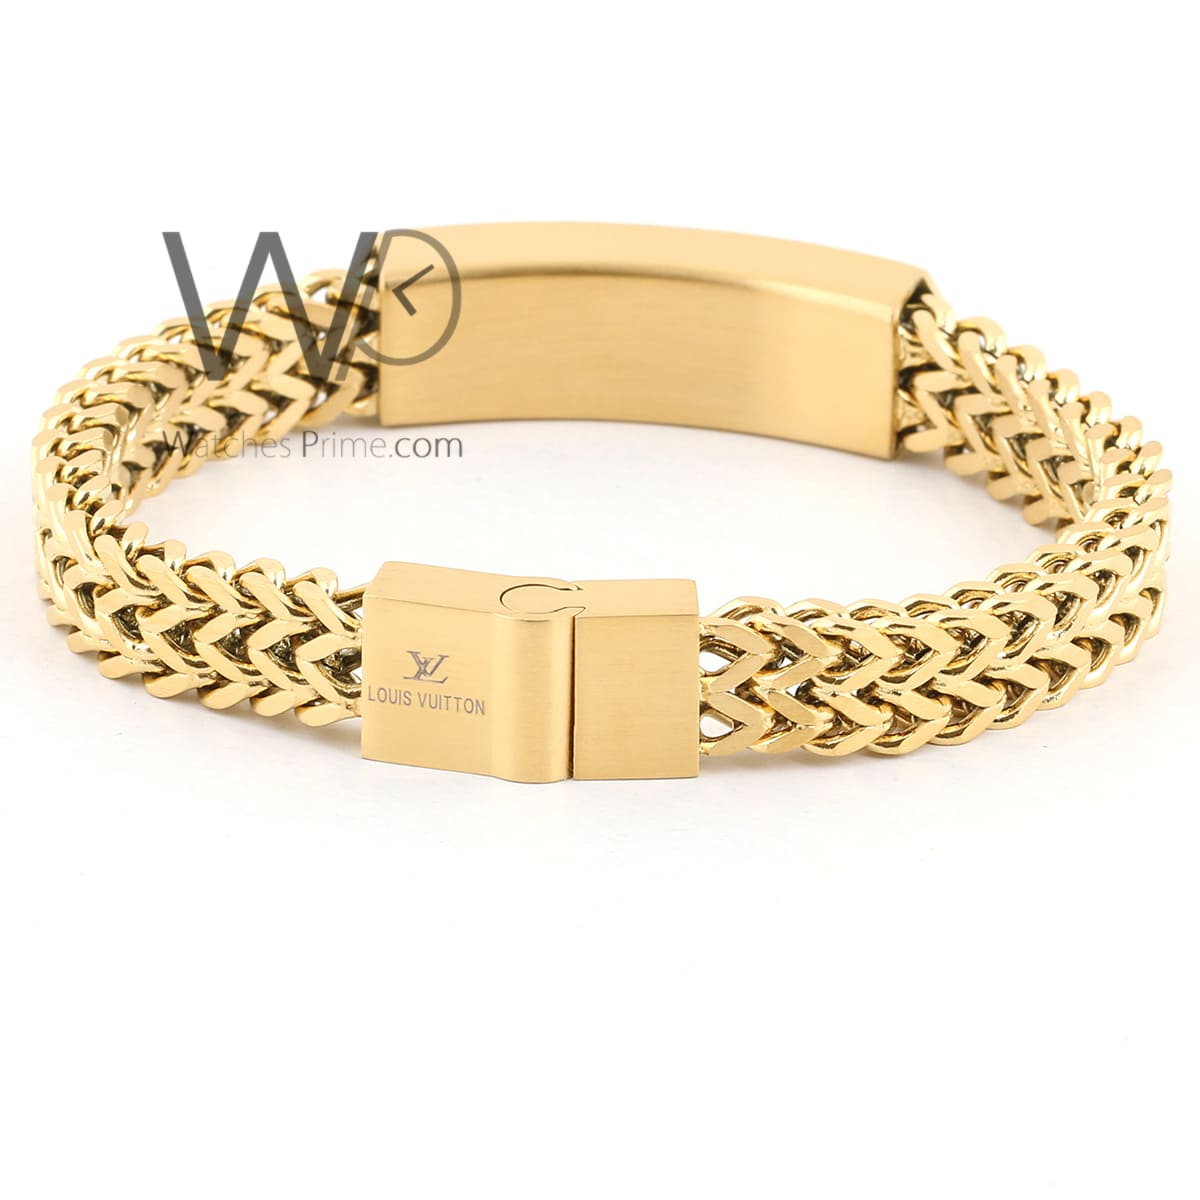 Louis Vuitton LV rose gold metal men bracelet | Watches Prime